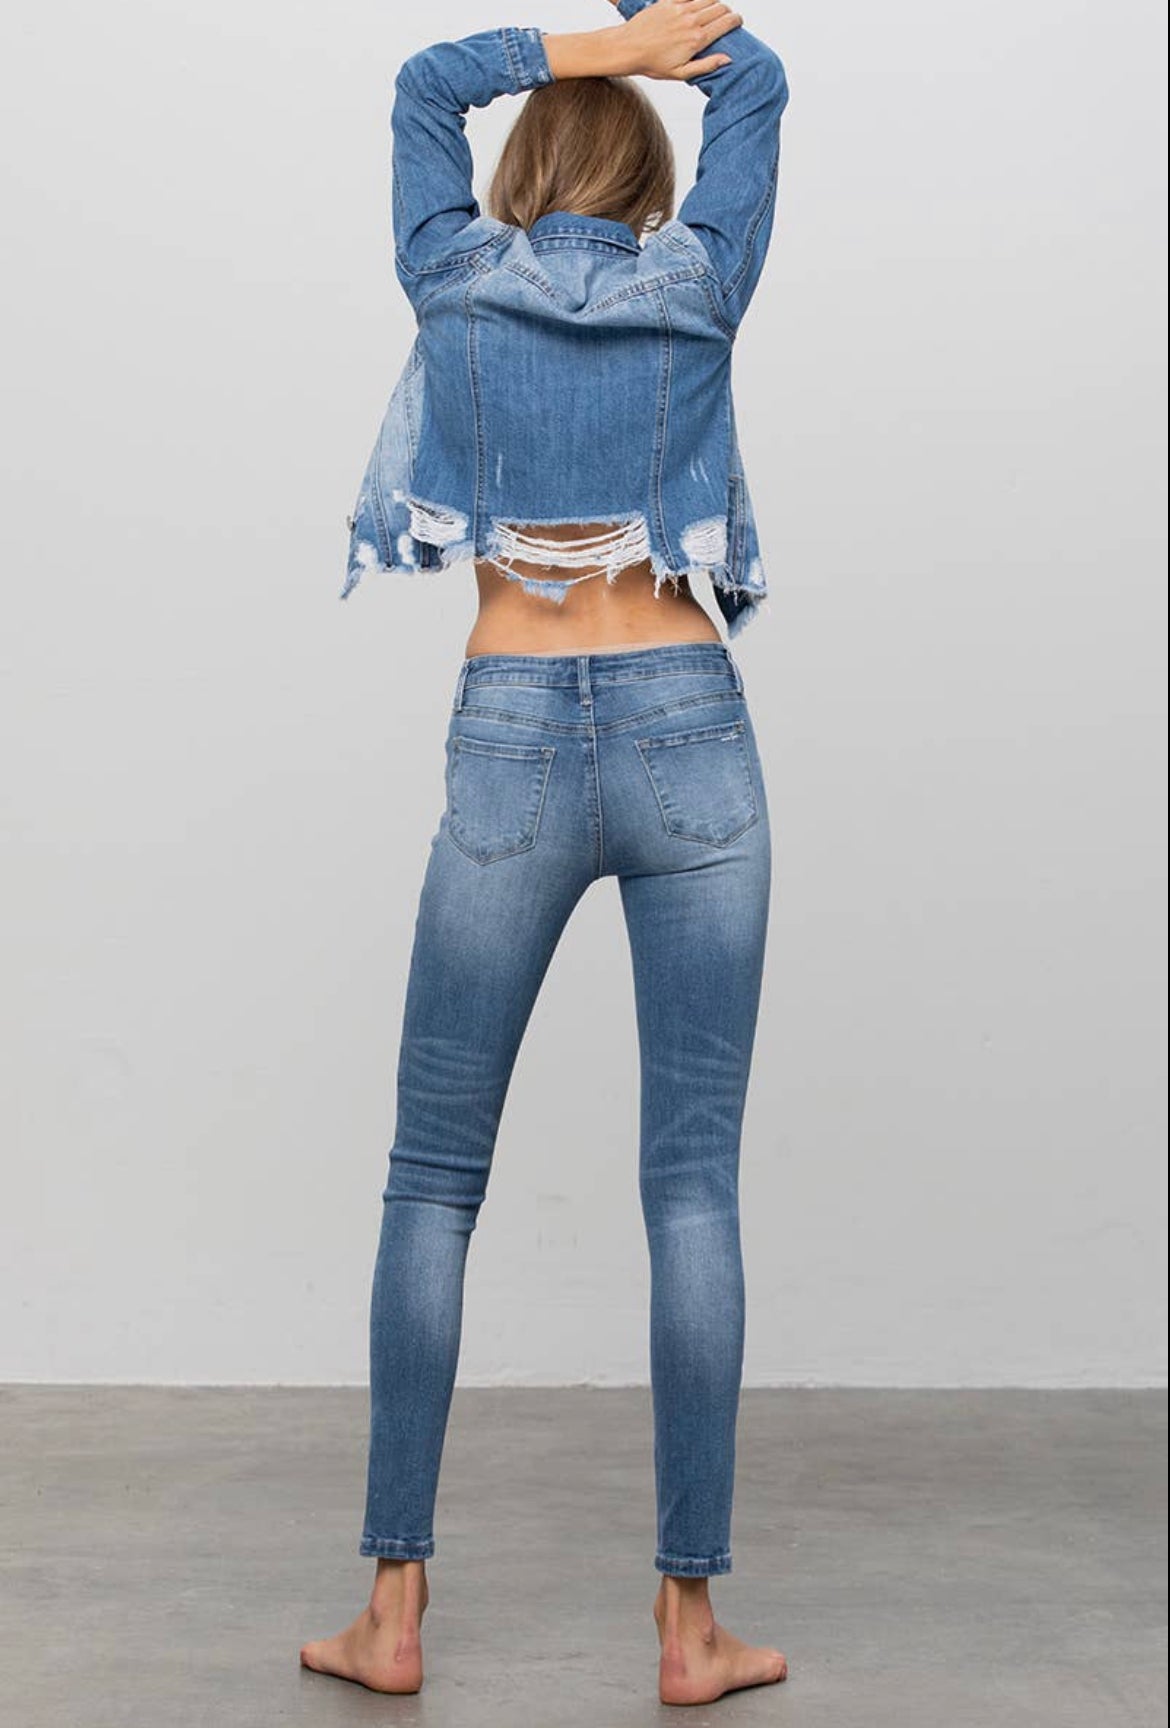 Bottom Jeans – Fashion Gem Apparel